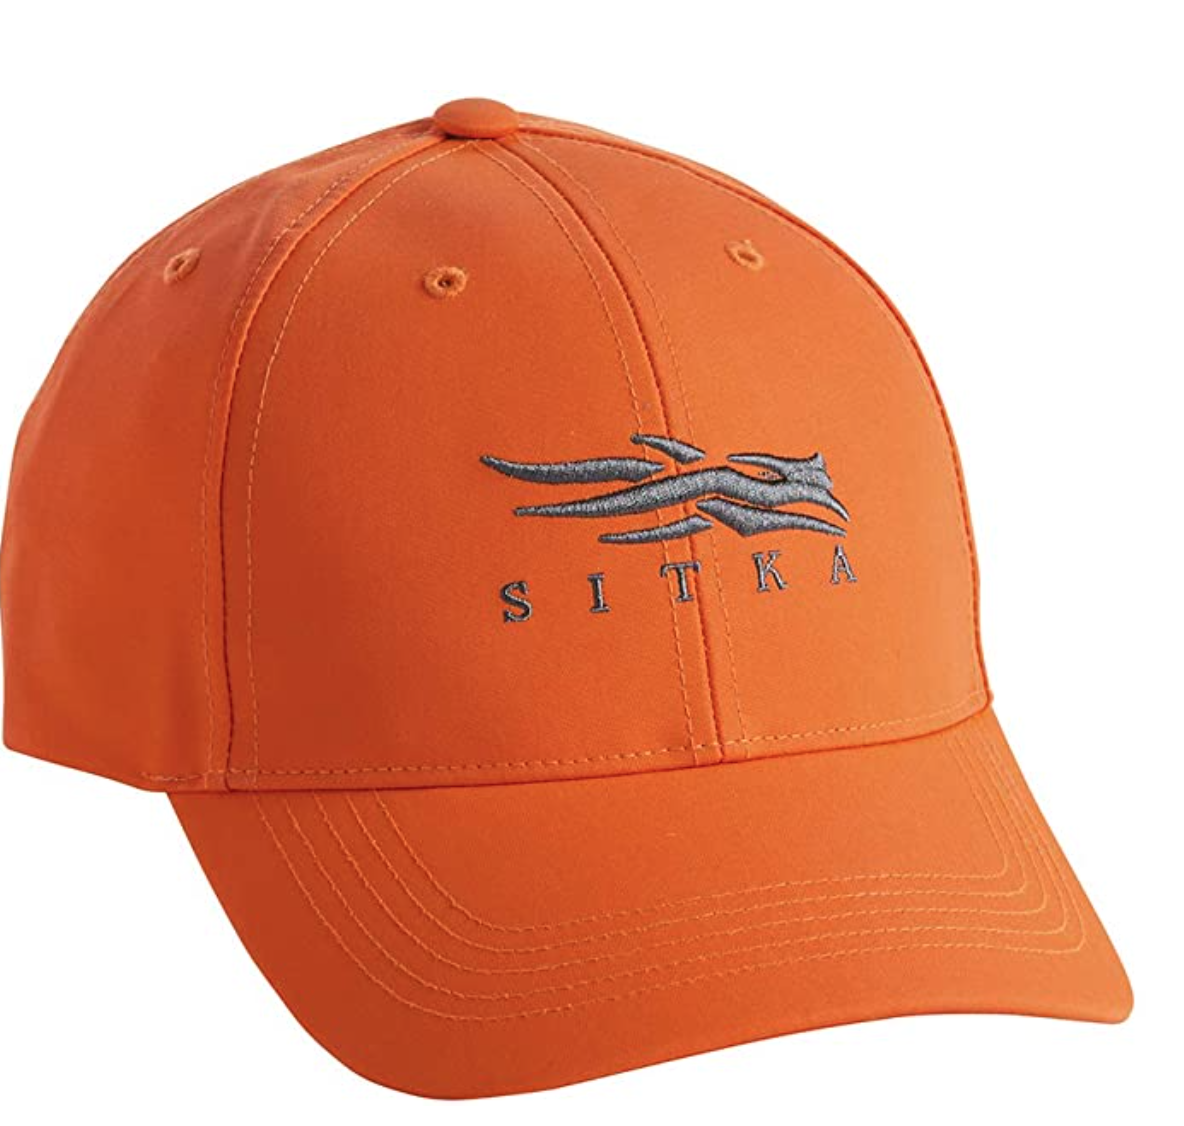 SITKA Gear Men's Ballistic Cap, Blaze Orange, One Size Fits All